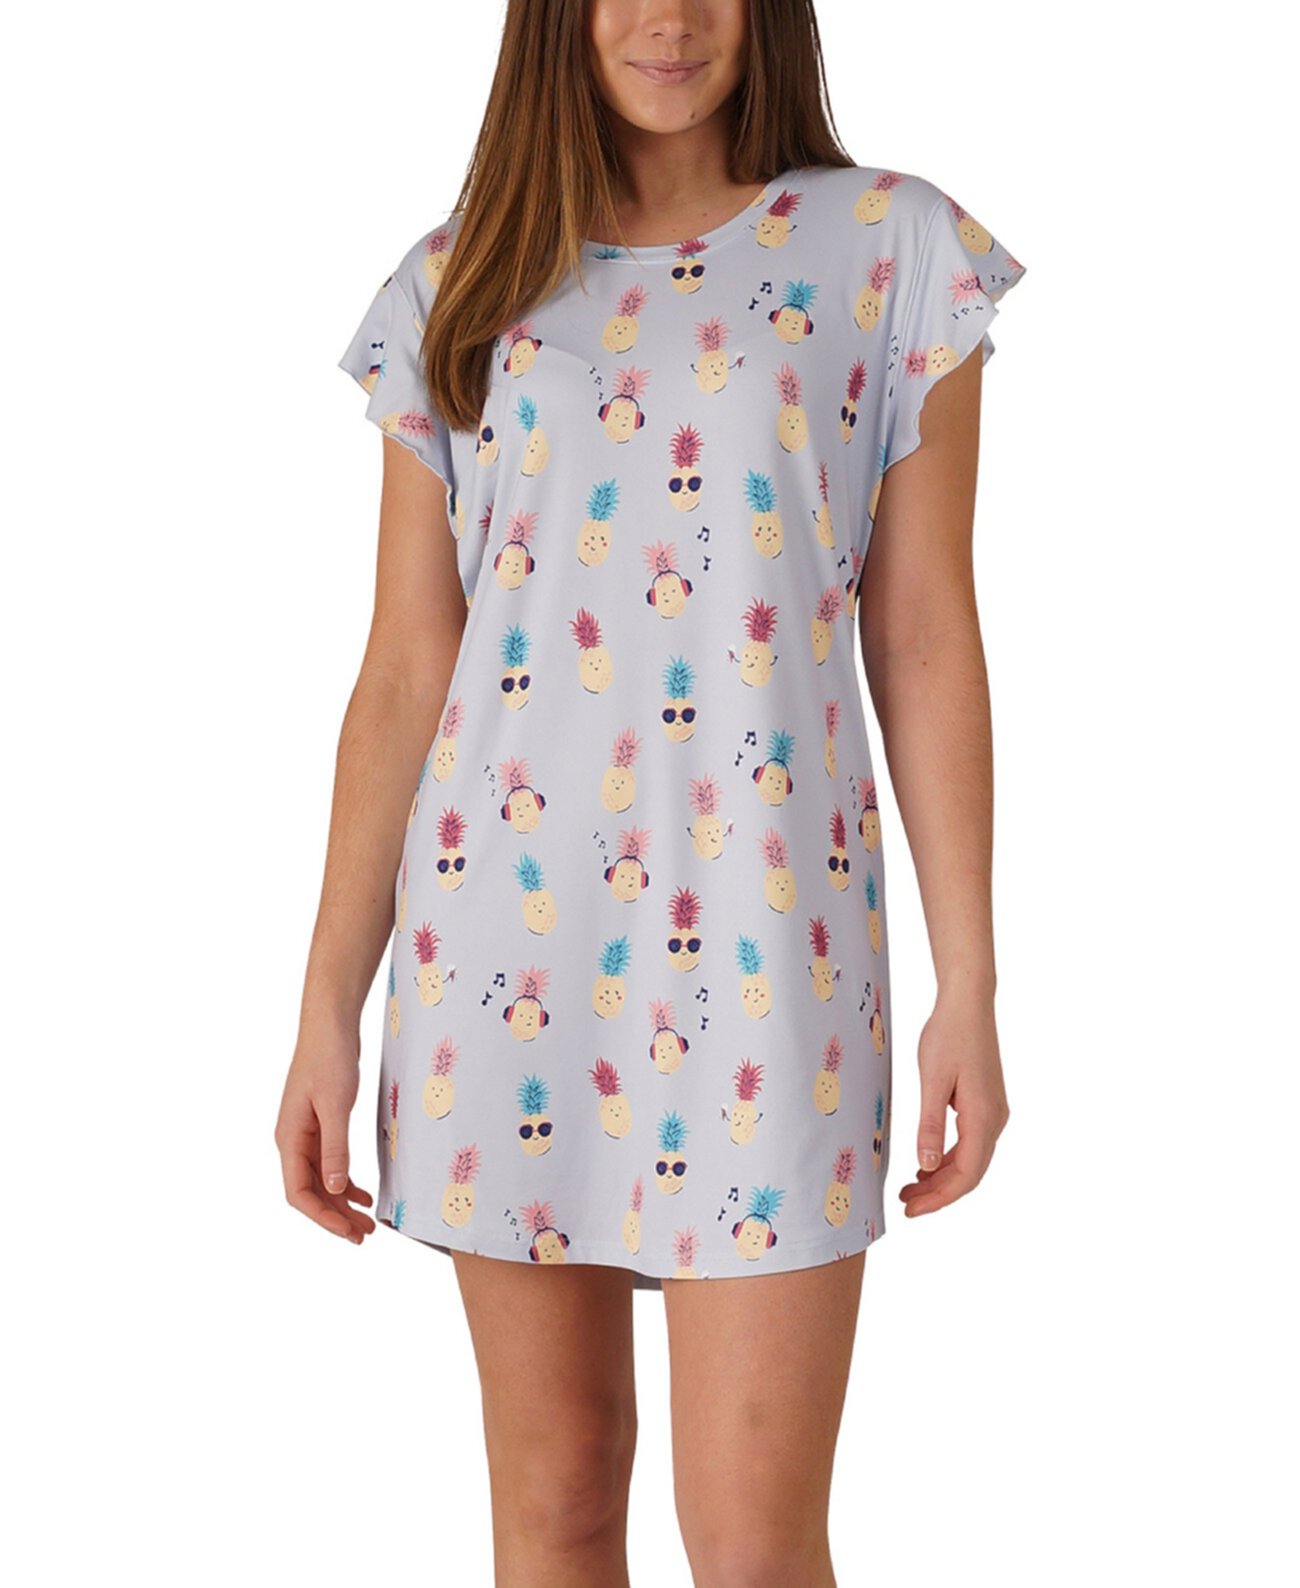 Nite Nite Plus Size Pineapple Sleepshirt Nightgown, только в Интернете Munki Munki